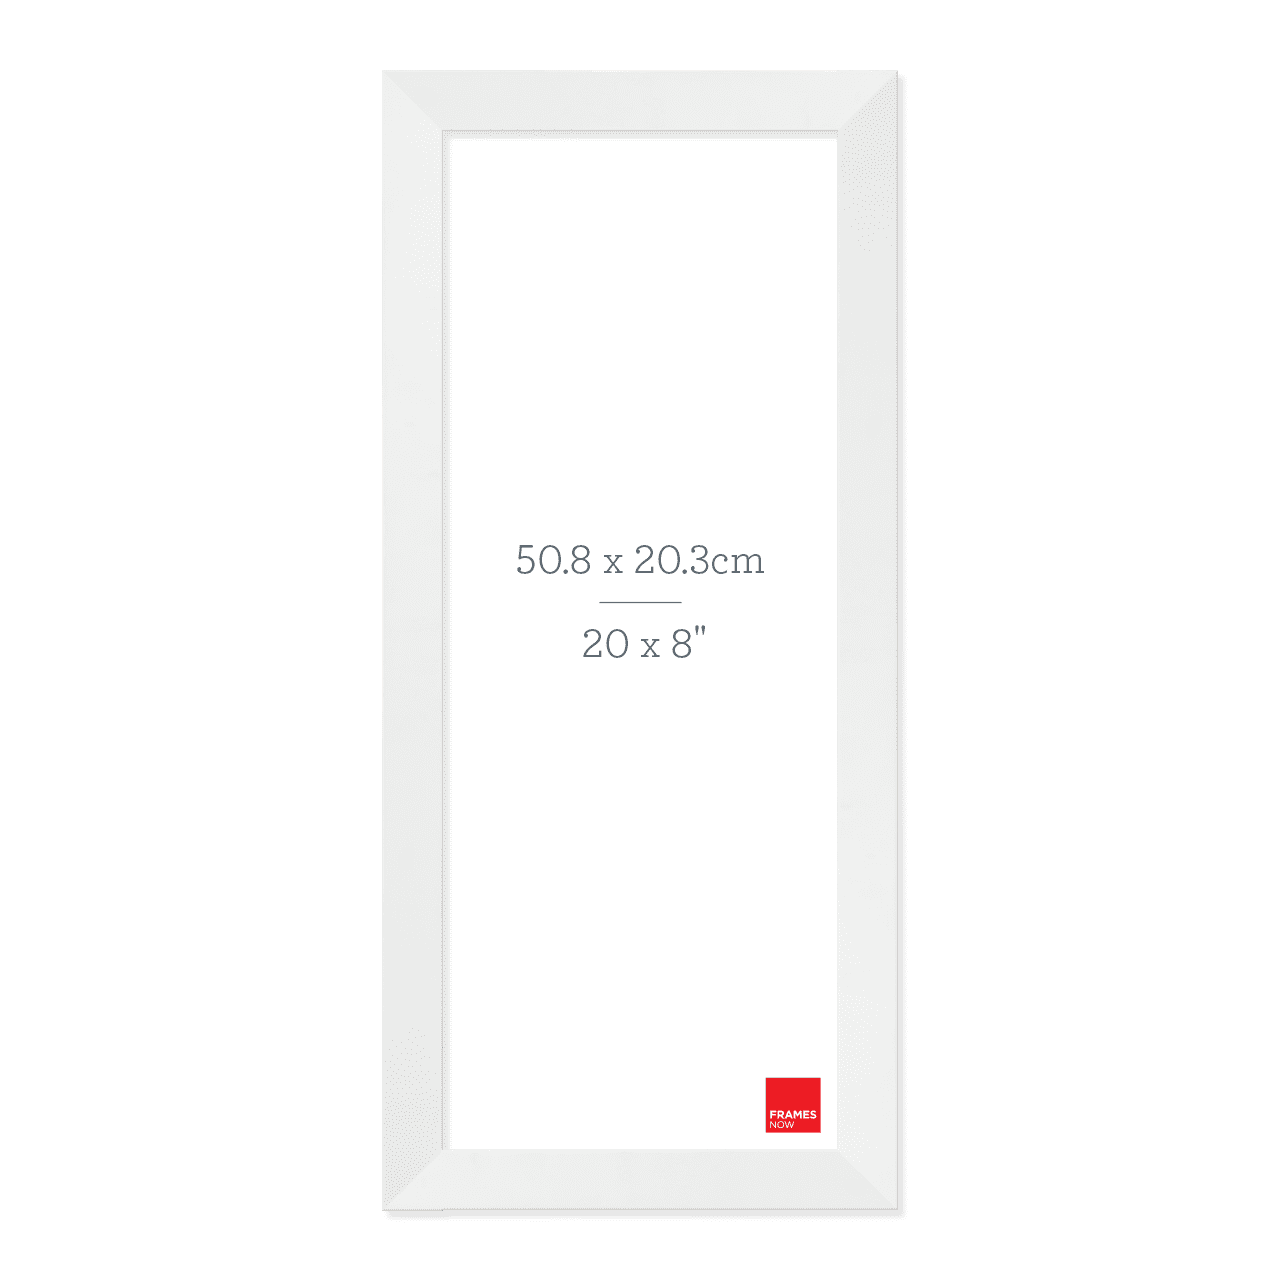 Premium Matte White Panoramic Picture Frame for 50.8 x 20.3cm Artwork